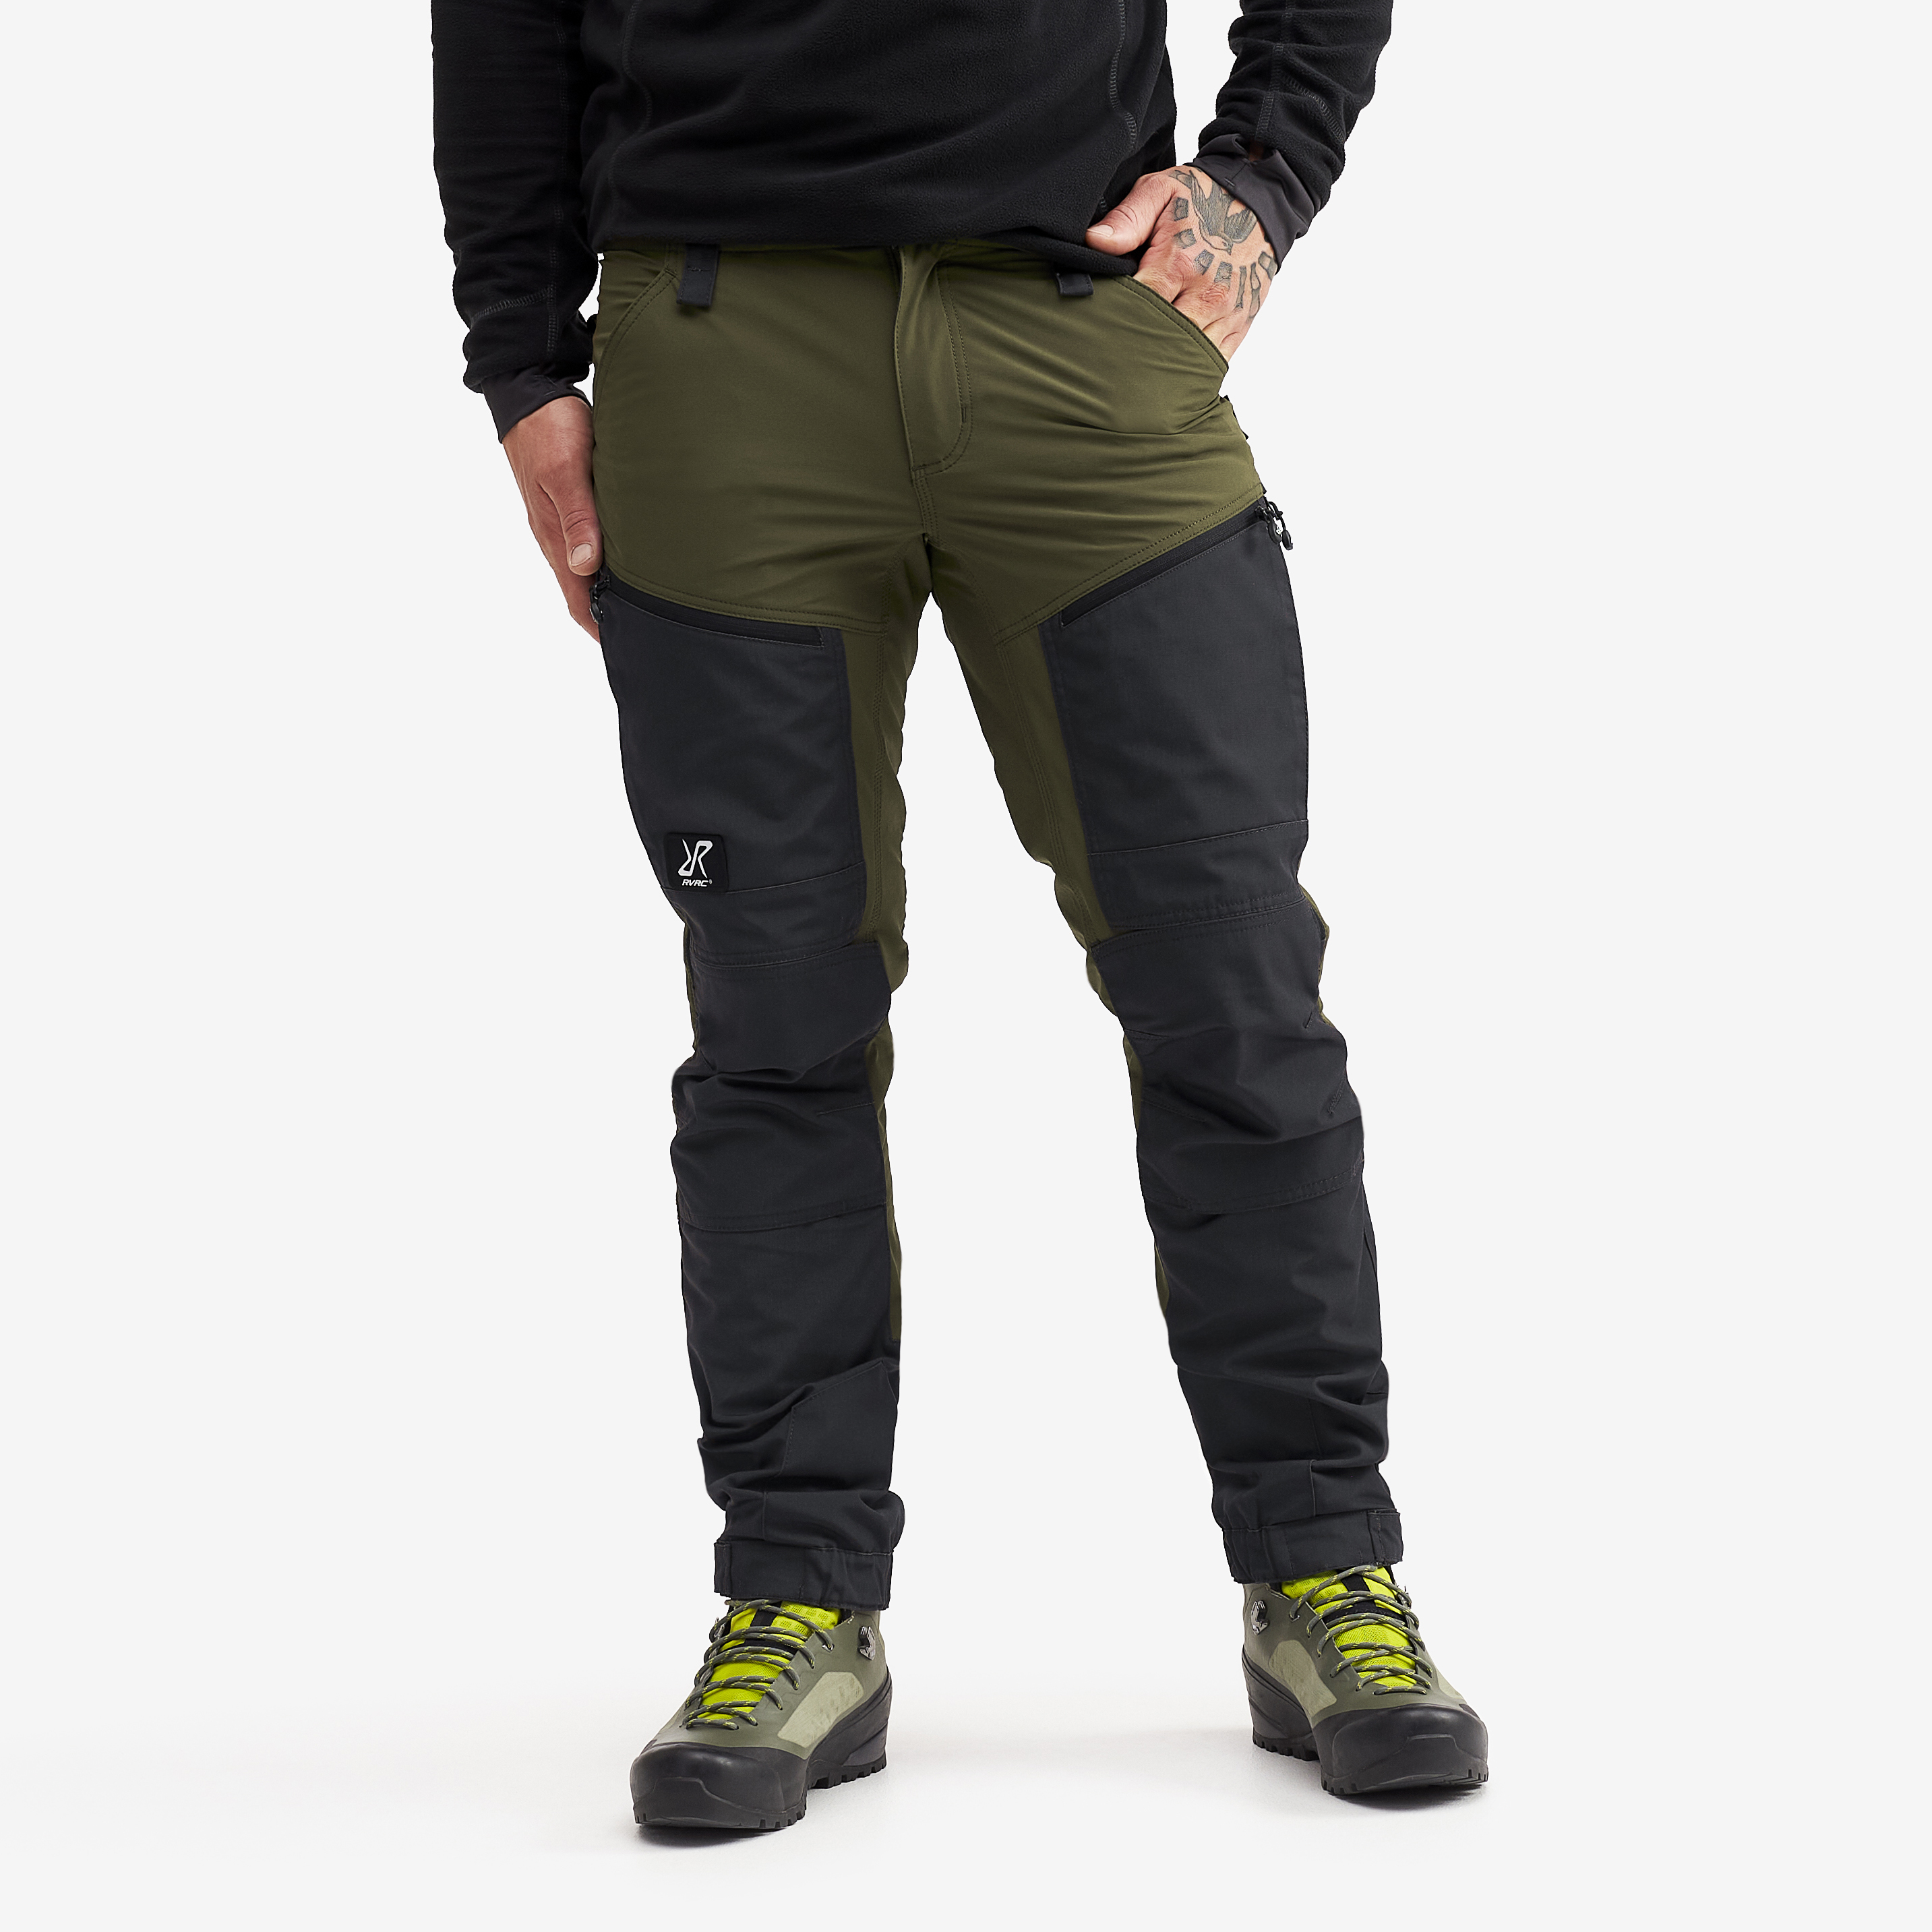 RVRC GP Pro Short Wanderhose in Grün für Männer